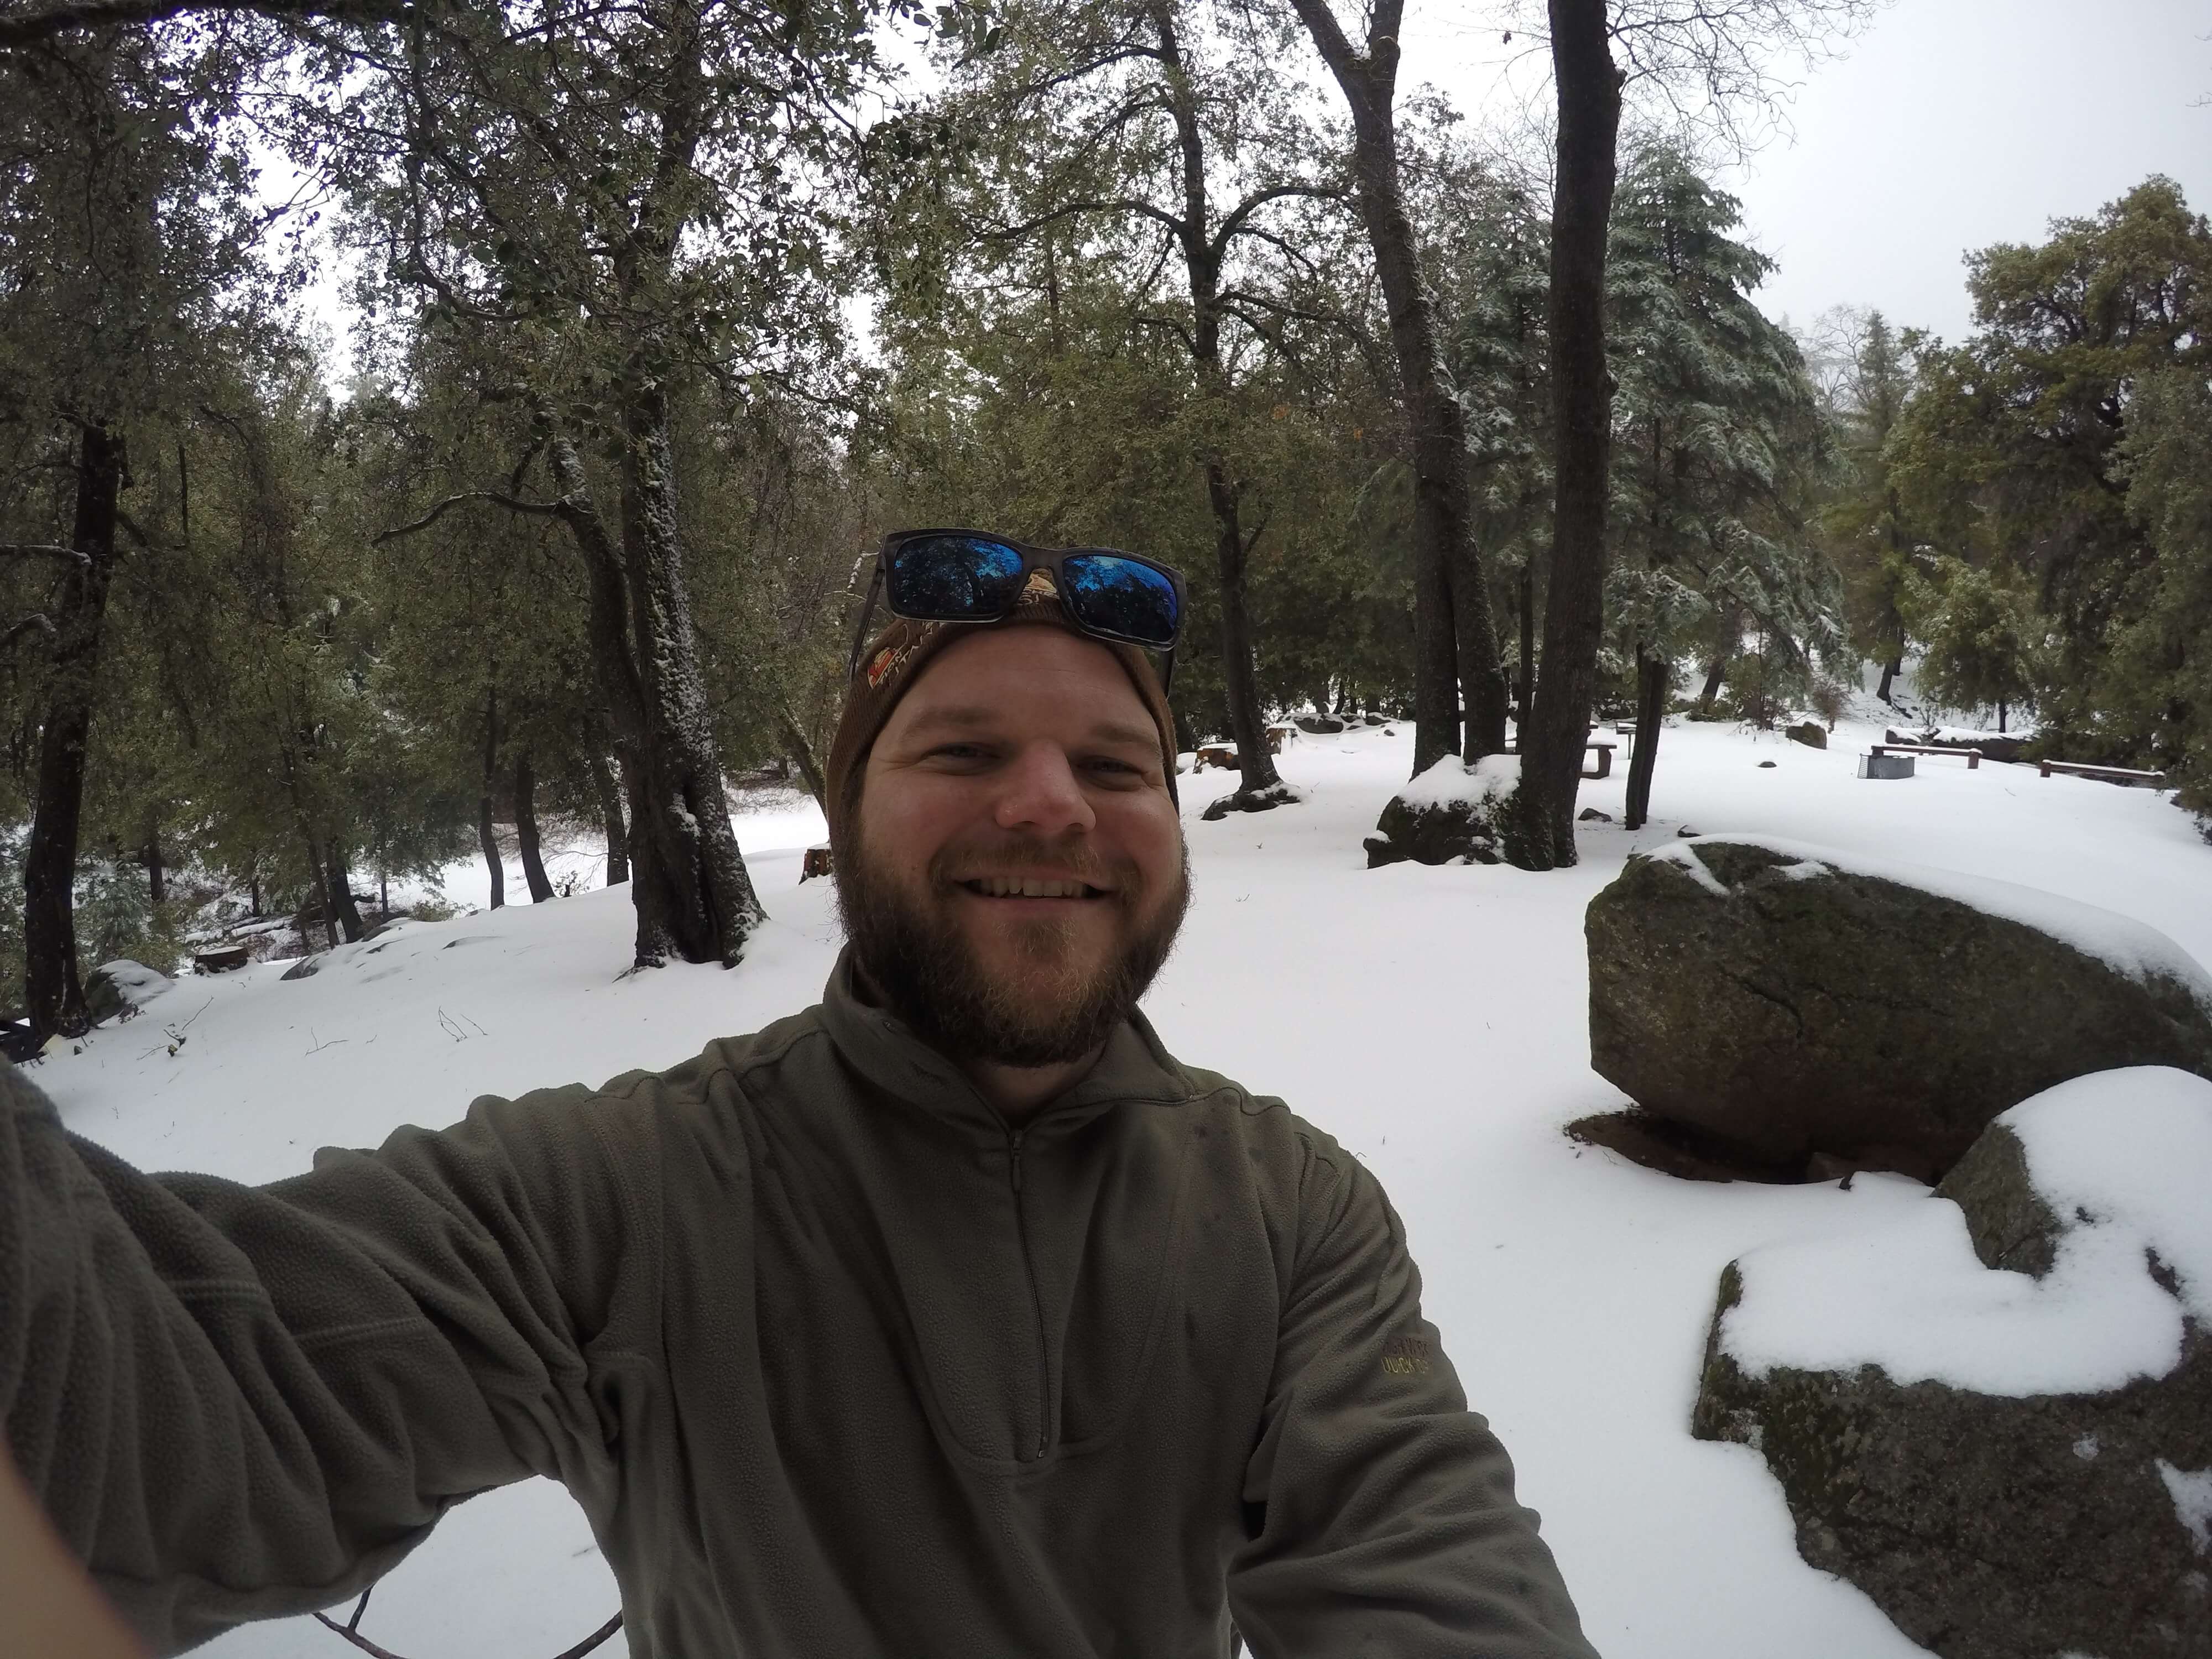 Thomas Desmond selfie on Palomar Mountain, CA